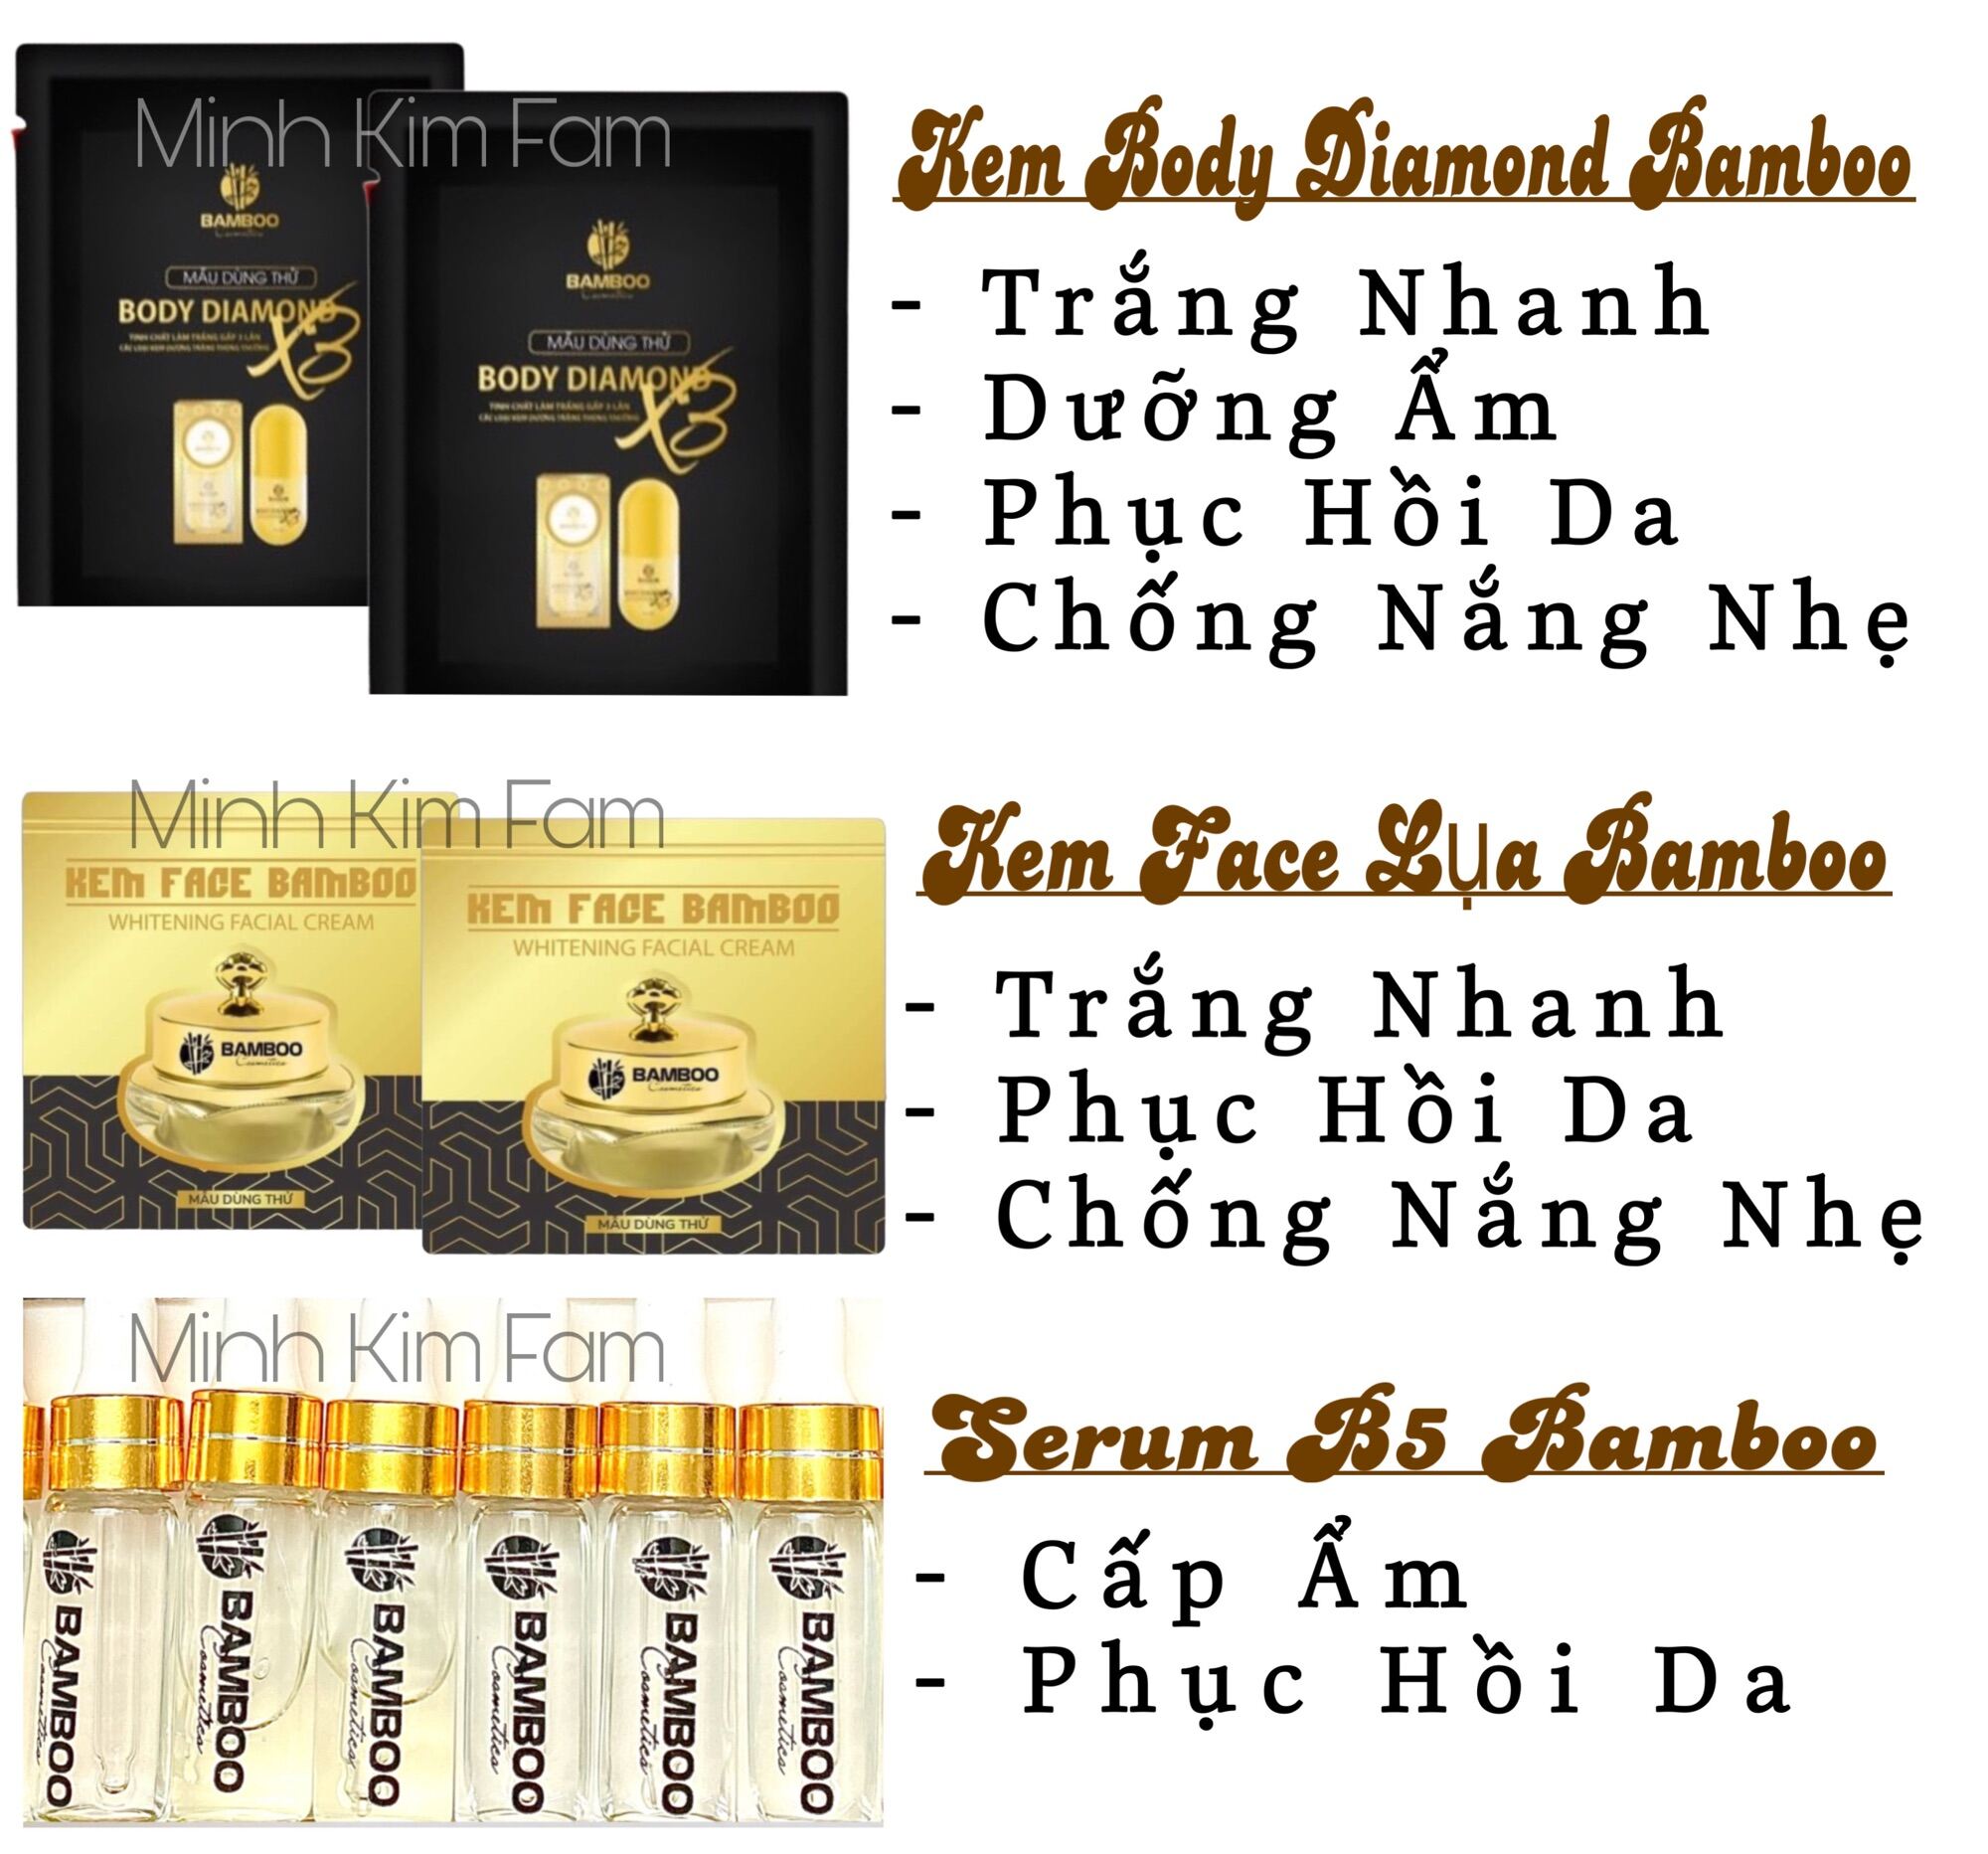 Kem Face Bamboo, Serum B5 Bamboo, Kem Body X3 Bamboo - Gói,Chai nhỏ